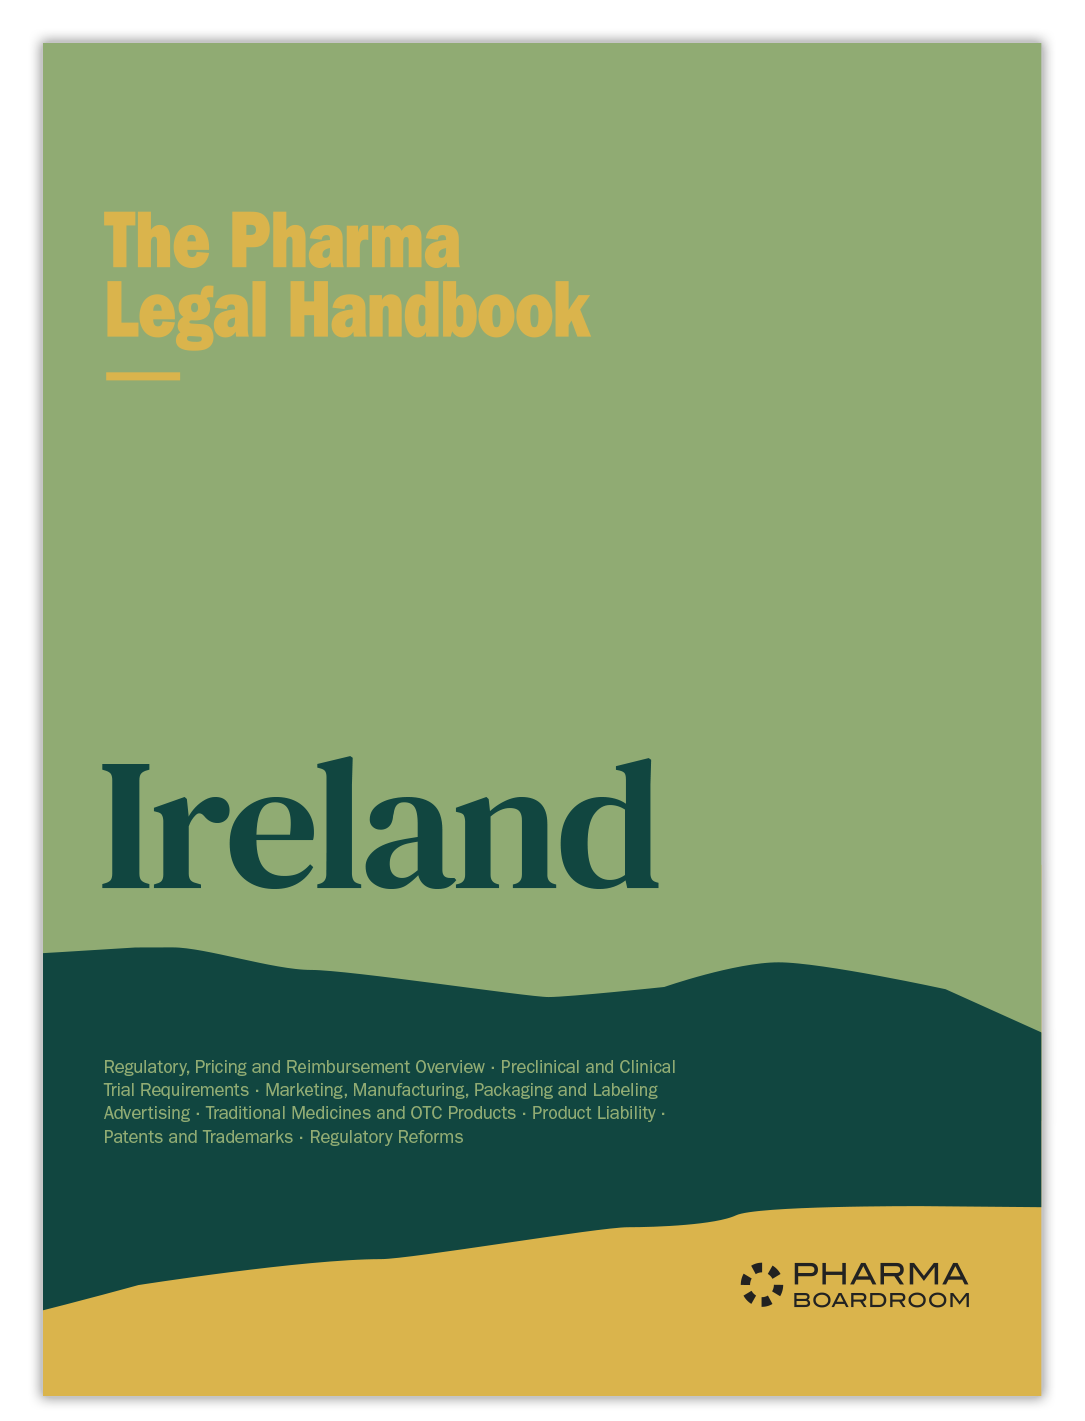 The Pharma Legal Handbook: Ireland